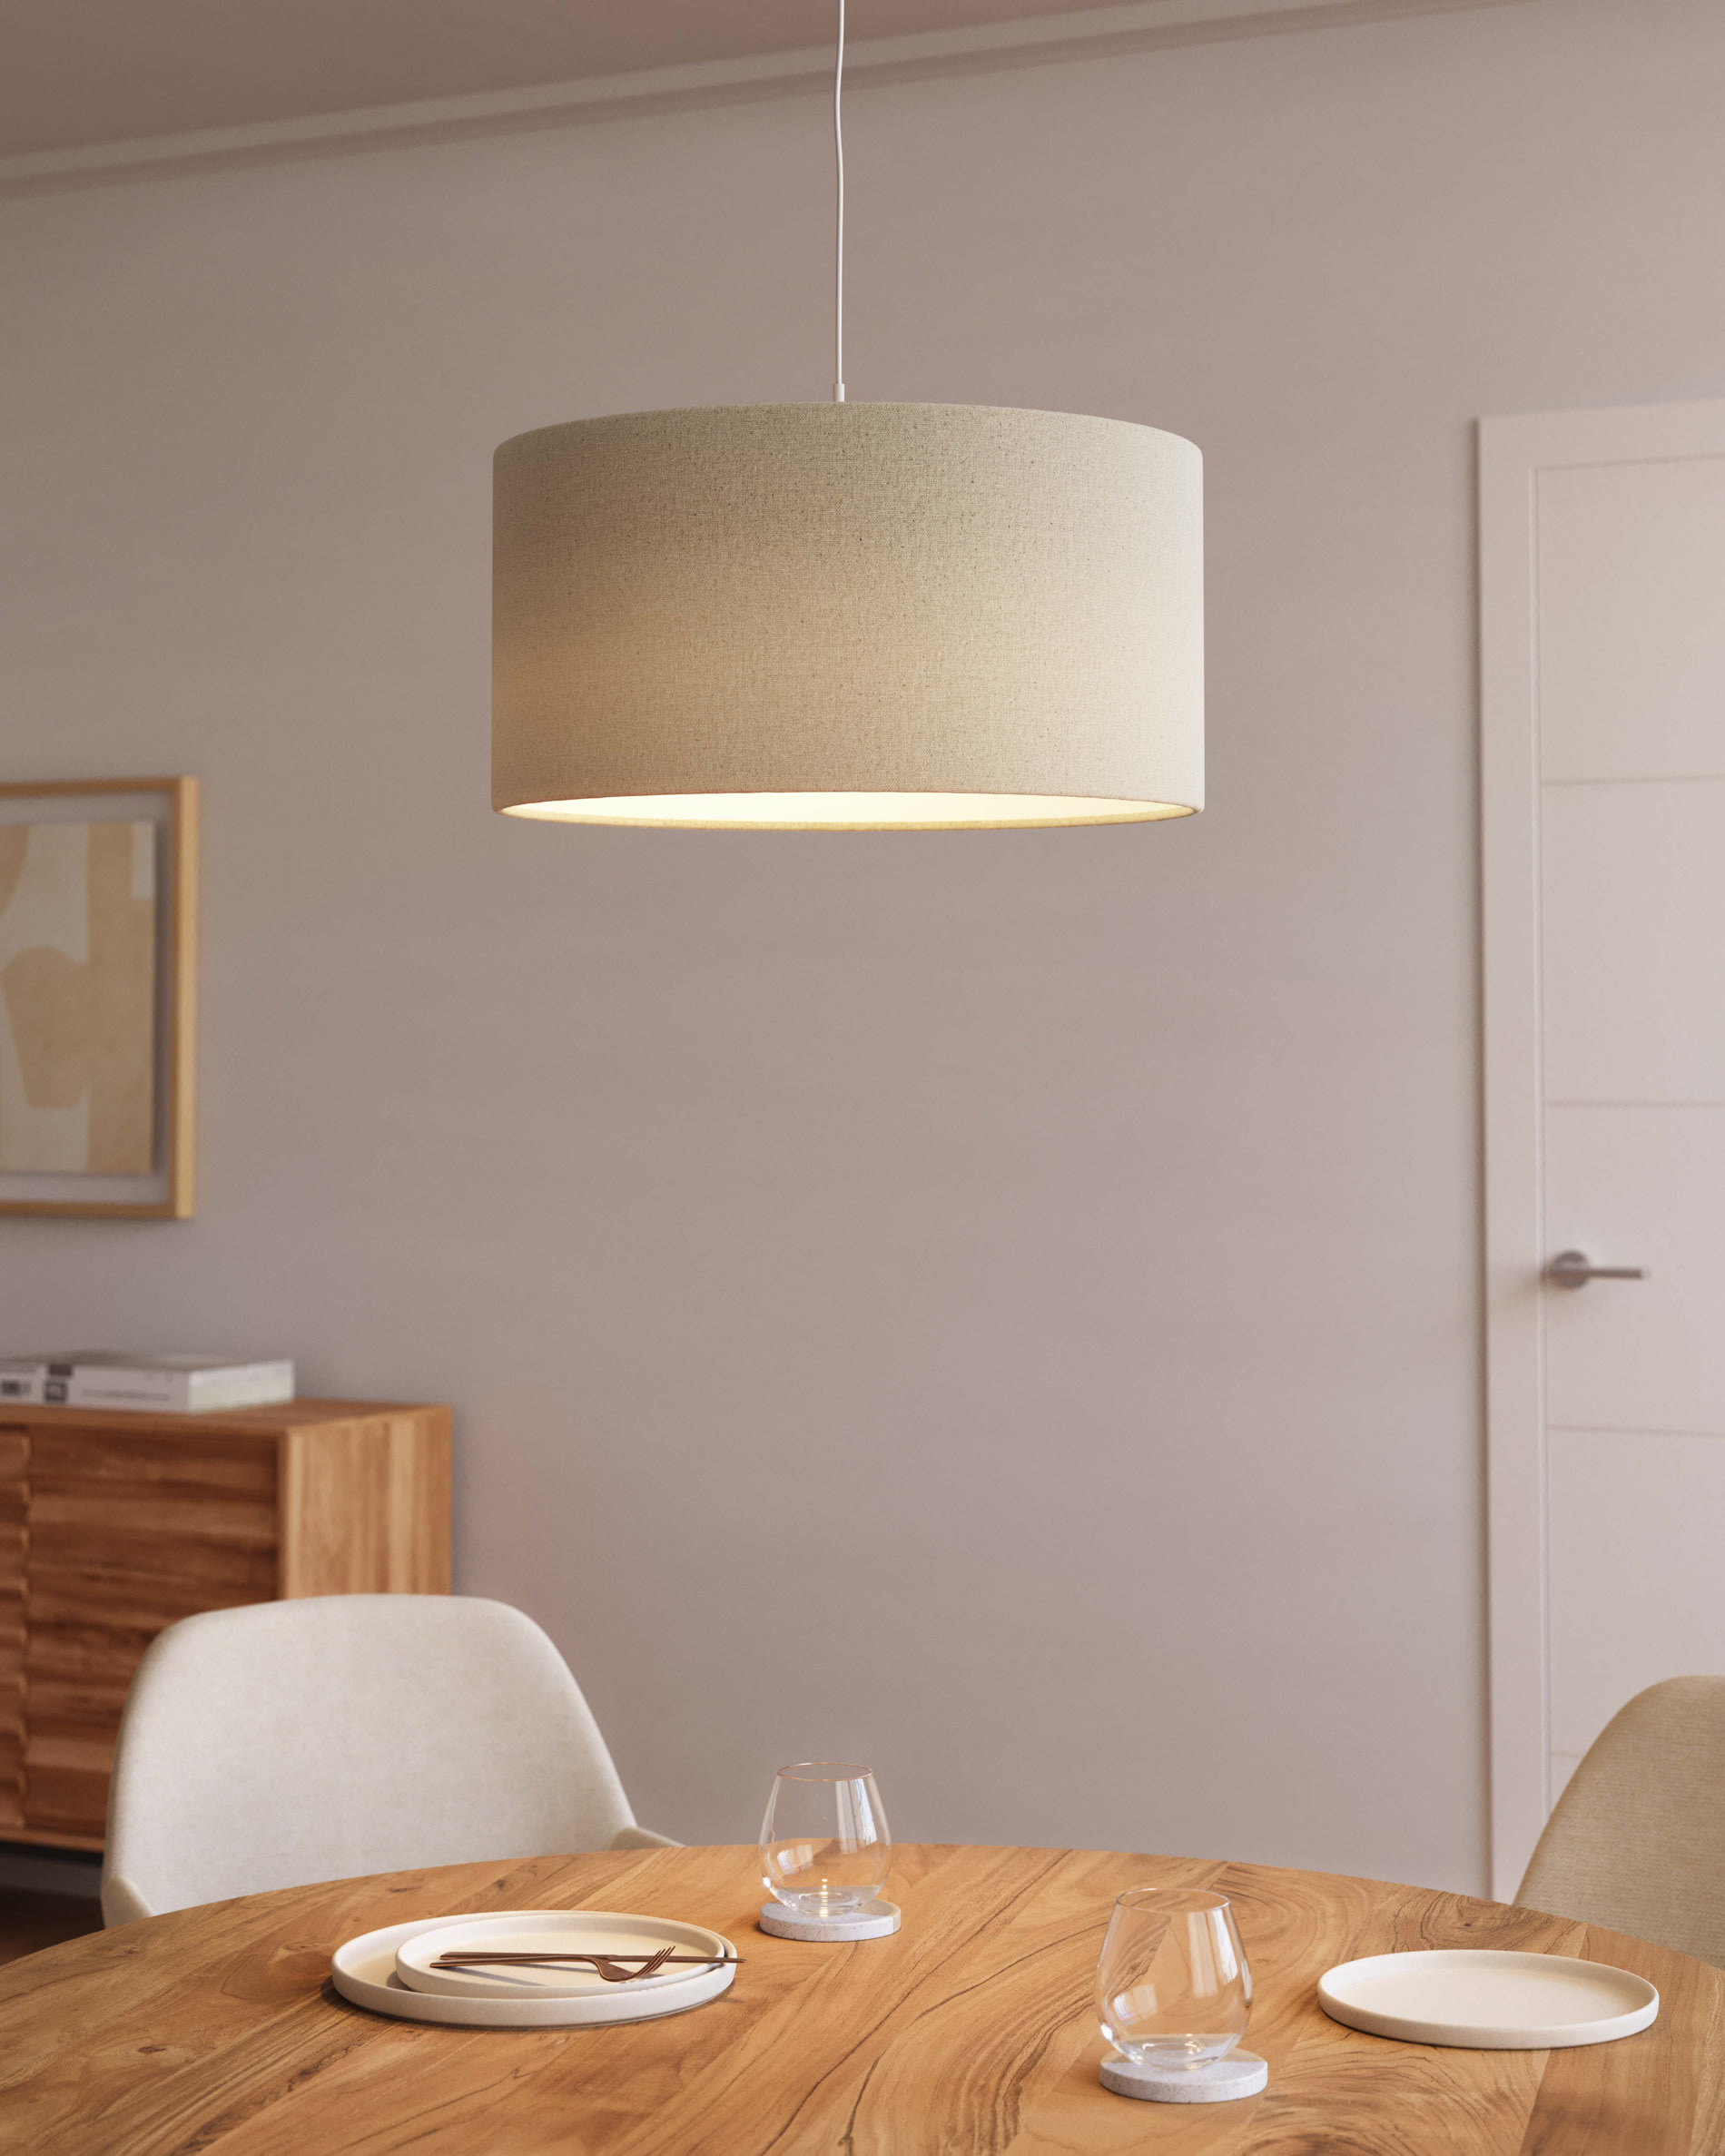 Nazli large linen ceiling light shade with beige finish Ø 50 cm